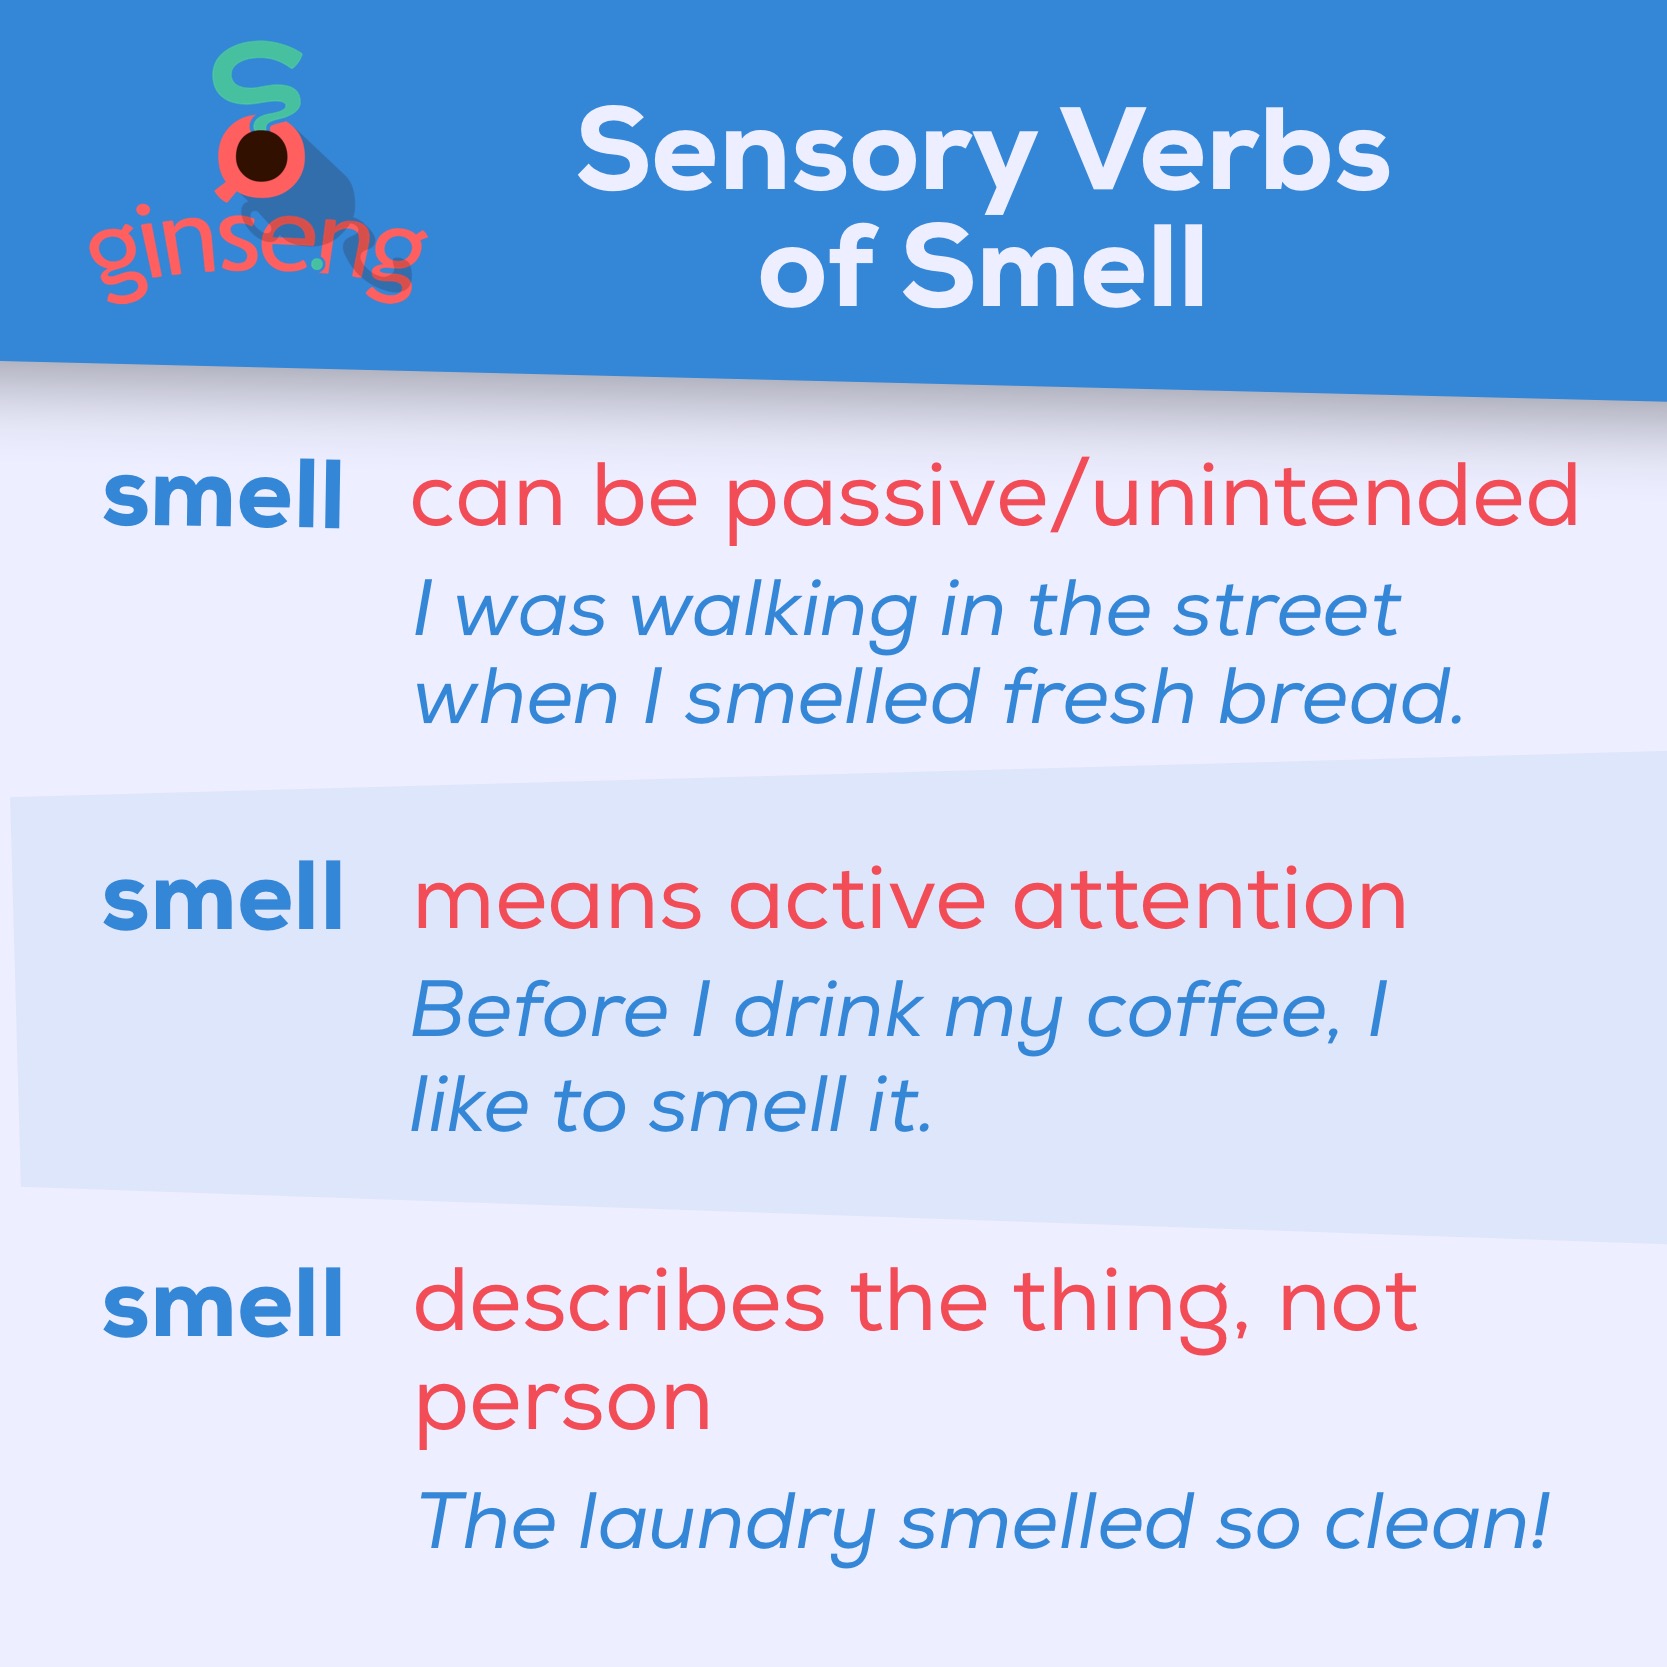 sensory-verbs-in-english-ginseng-english-learn-english